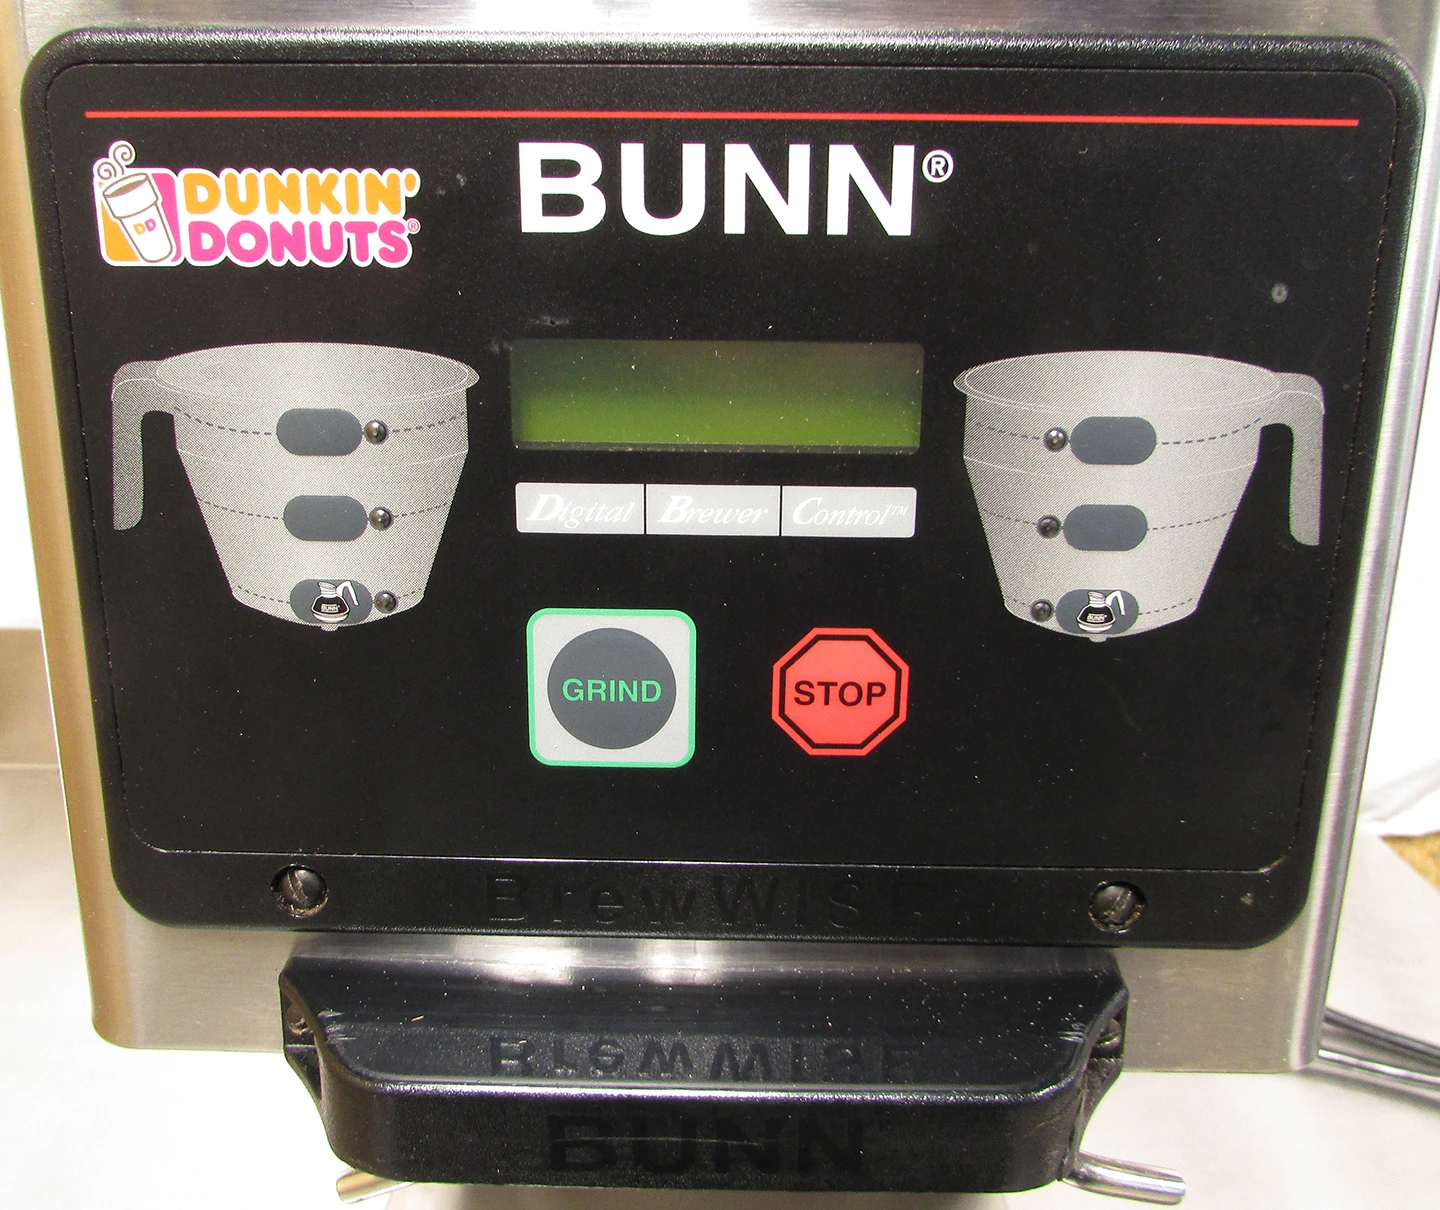 Bunn 35600.0020 9 Multi-Hopper Coffee Grinder and Storage - 12 lb. Capacity